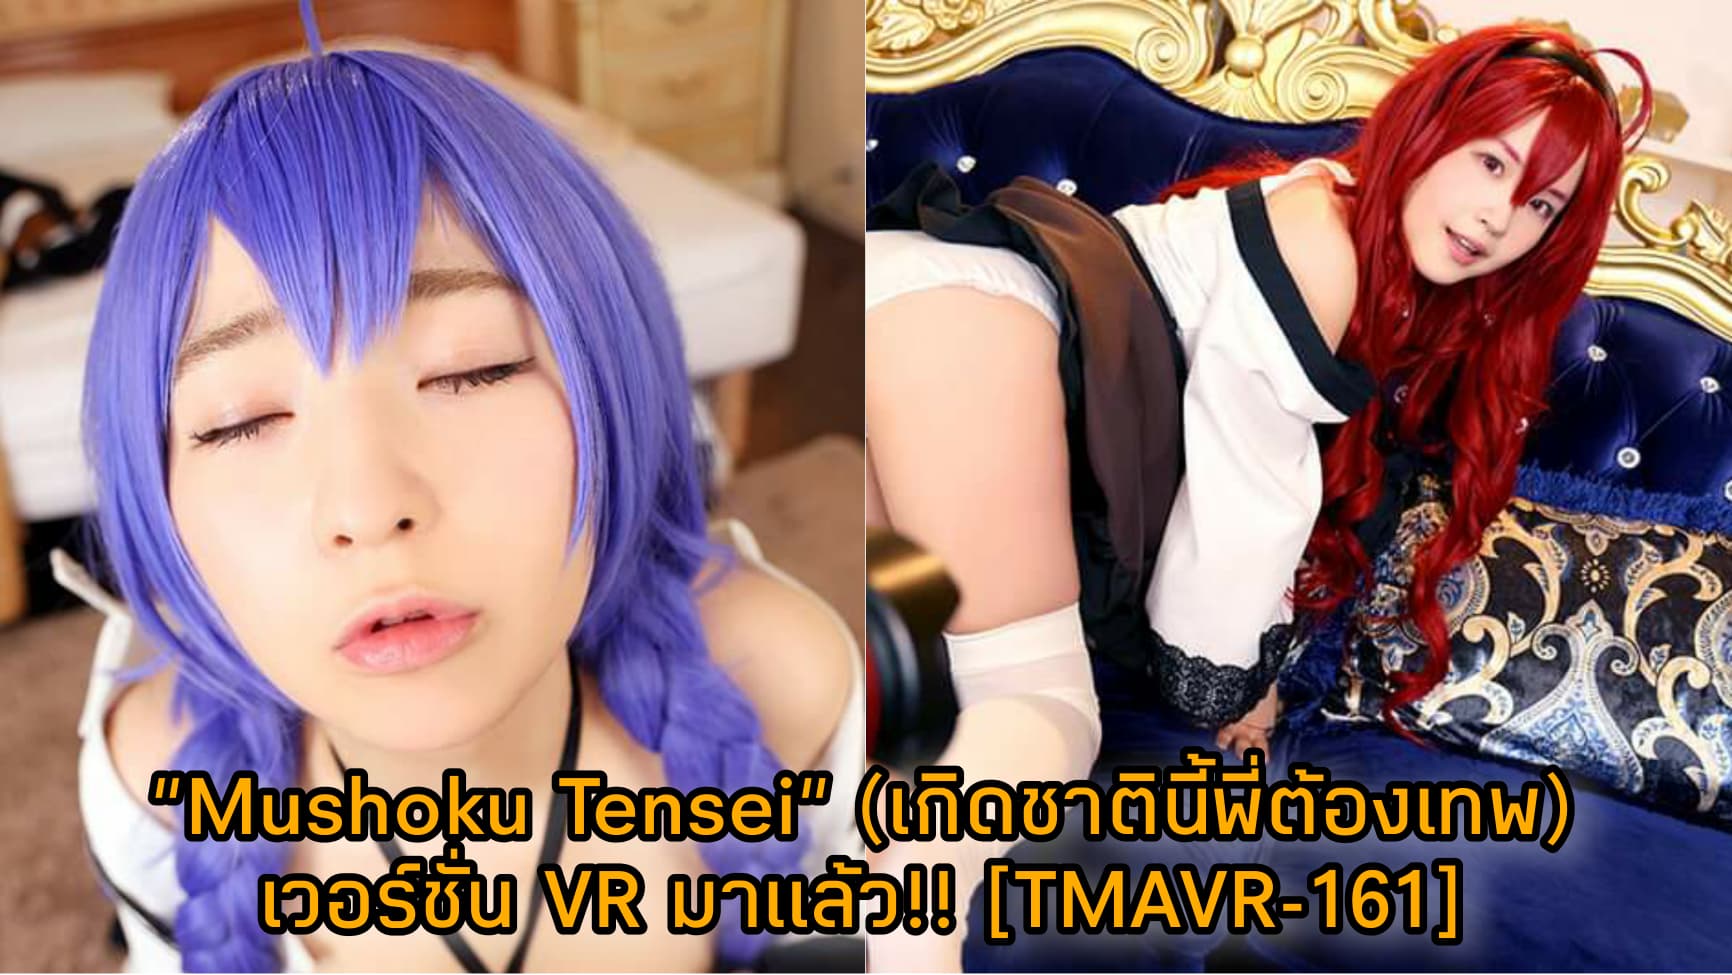 [TMAVR-161] JAV "เกิดชาตินี้พี่ต้องเทพ" Mushoku Tensei เวอร์ชั่น VR!! 16